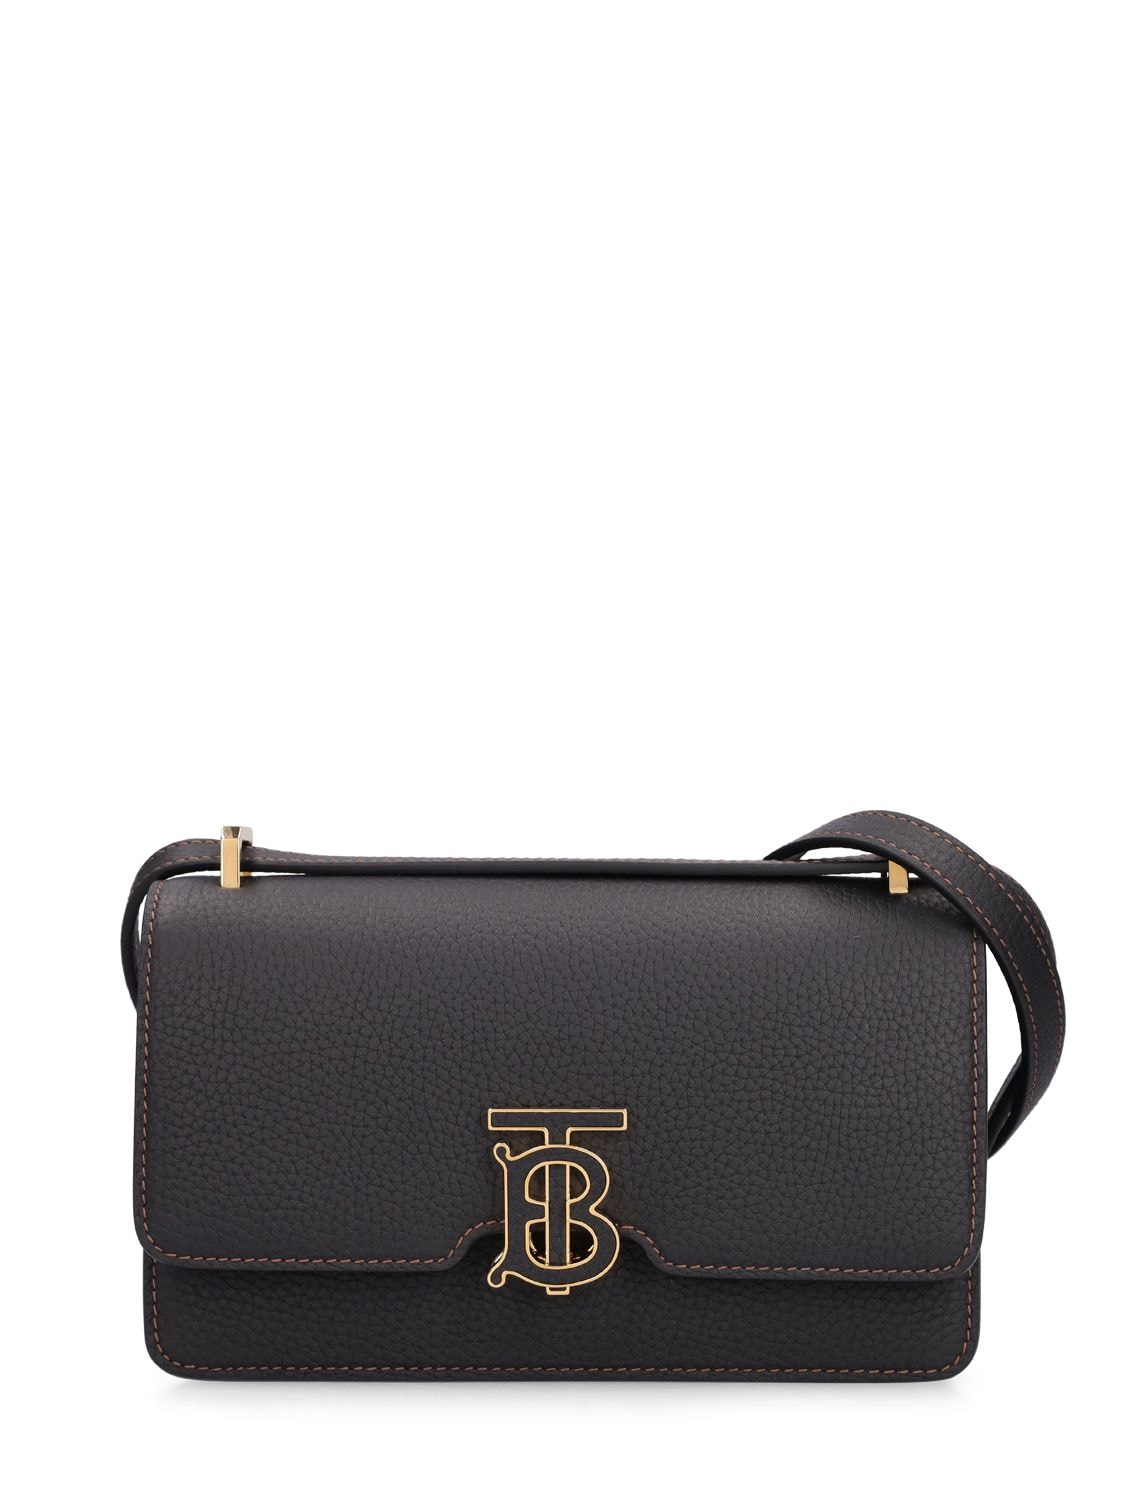 Burberry Mini Tb Elongated Leather Shoulder Bag In Black